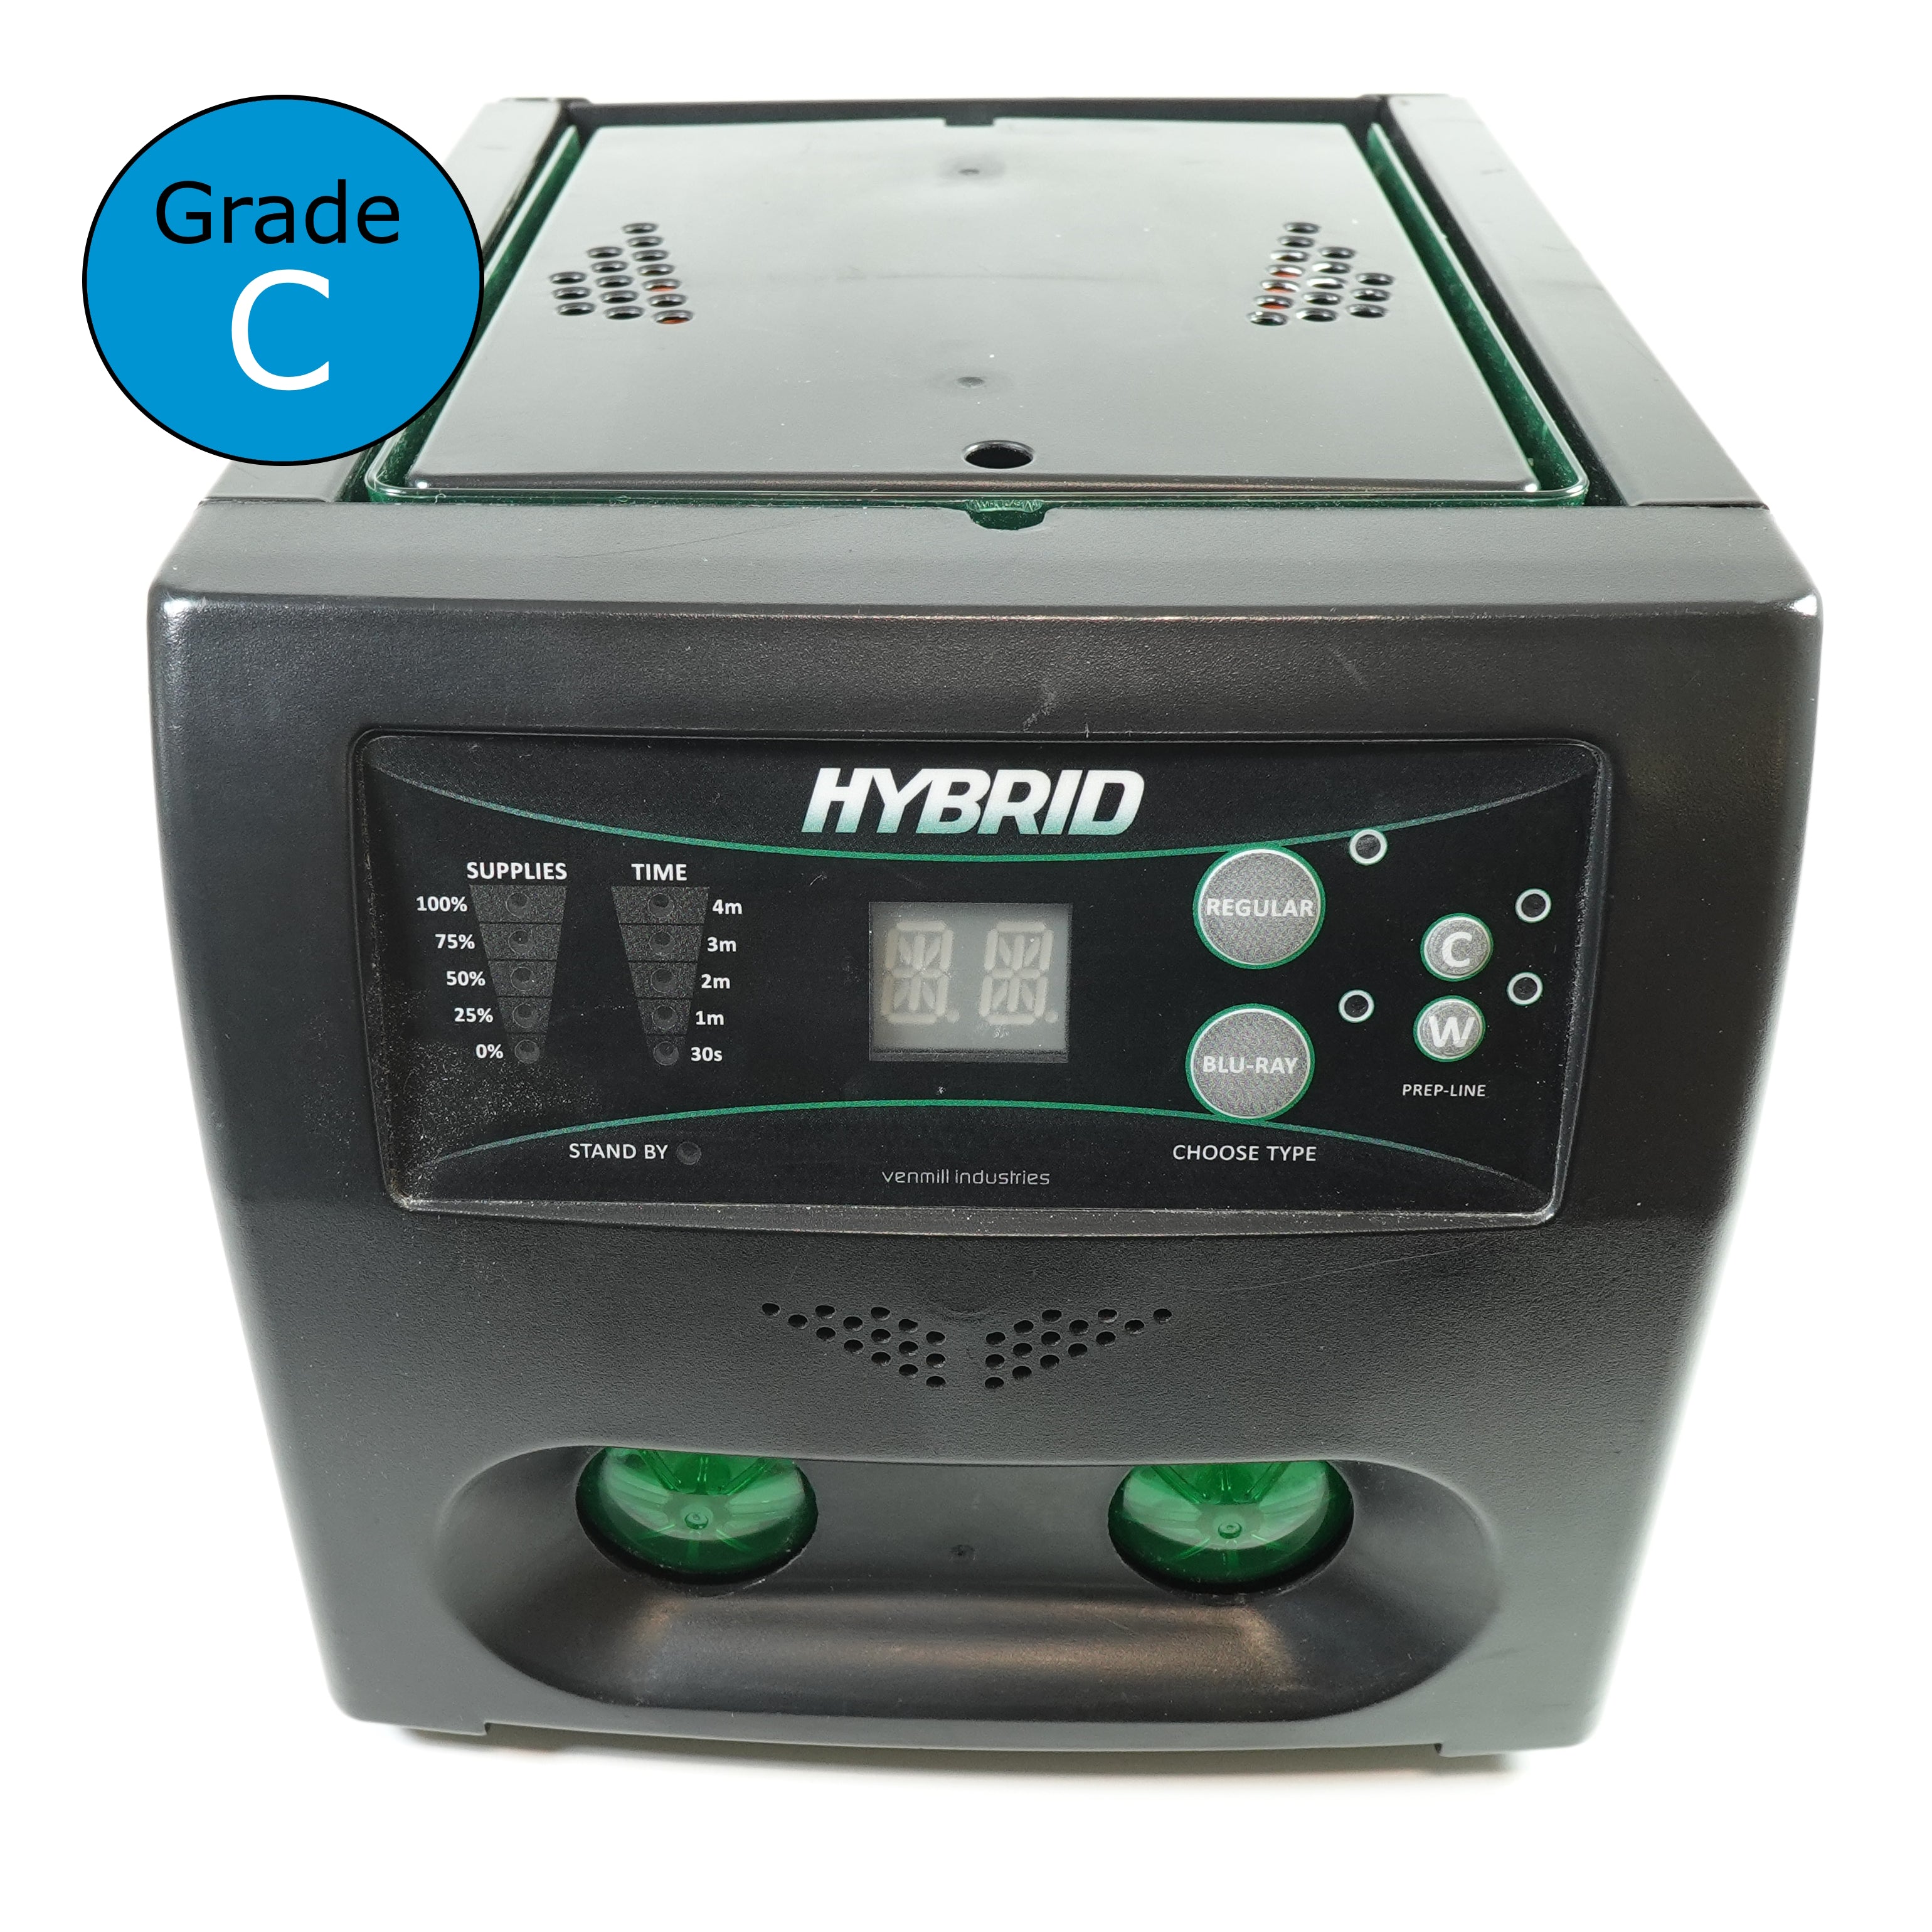 VMI Hybrid 2.0 Machine (Reconditioned) - Grade C